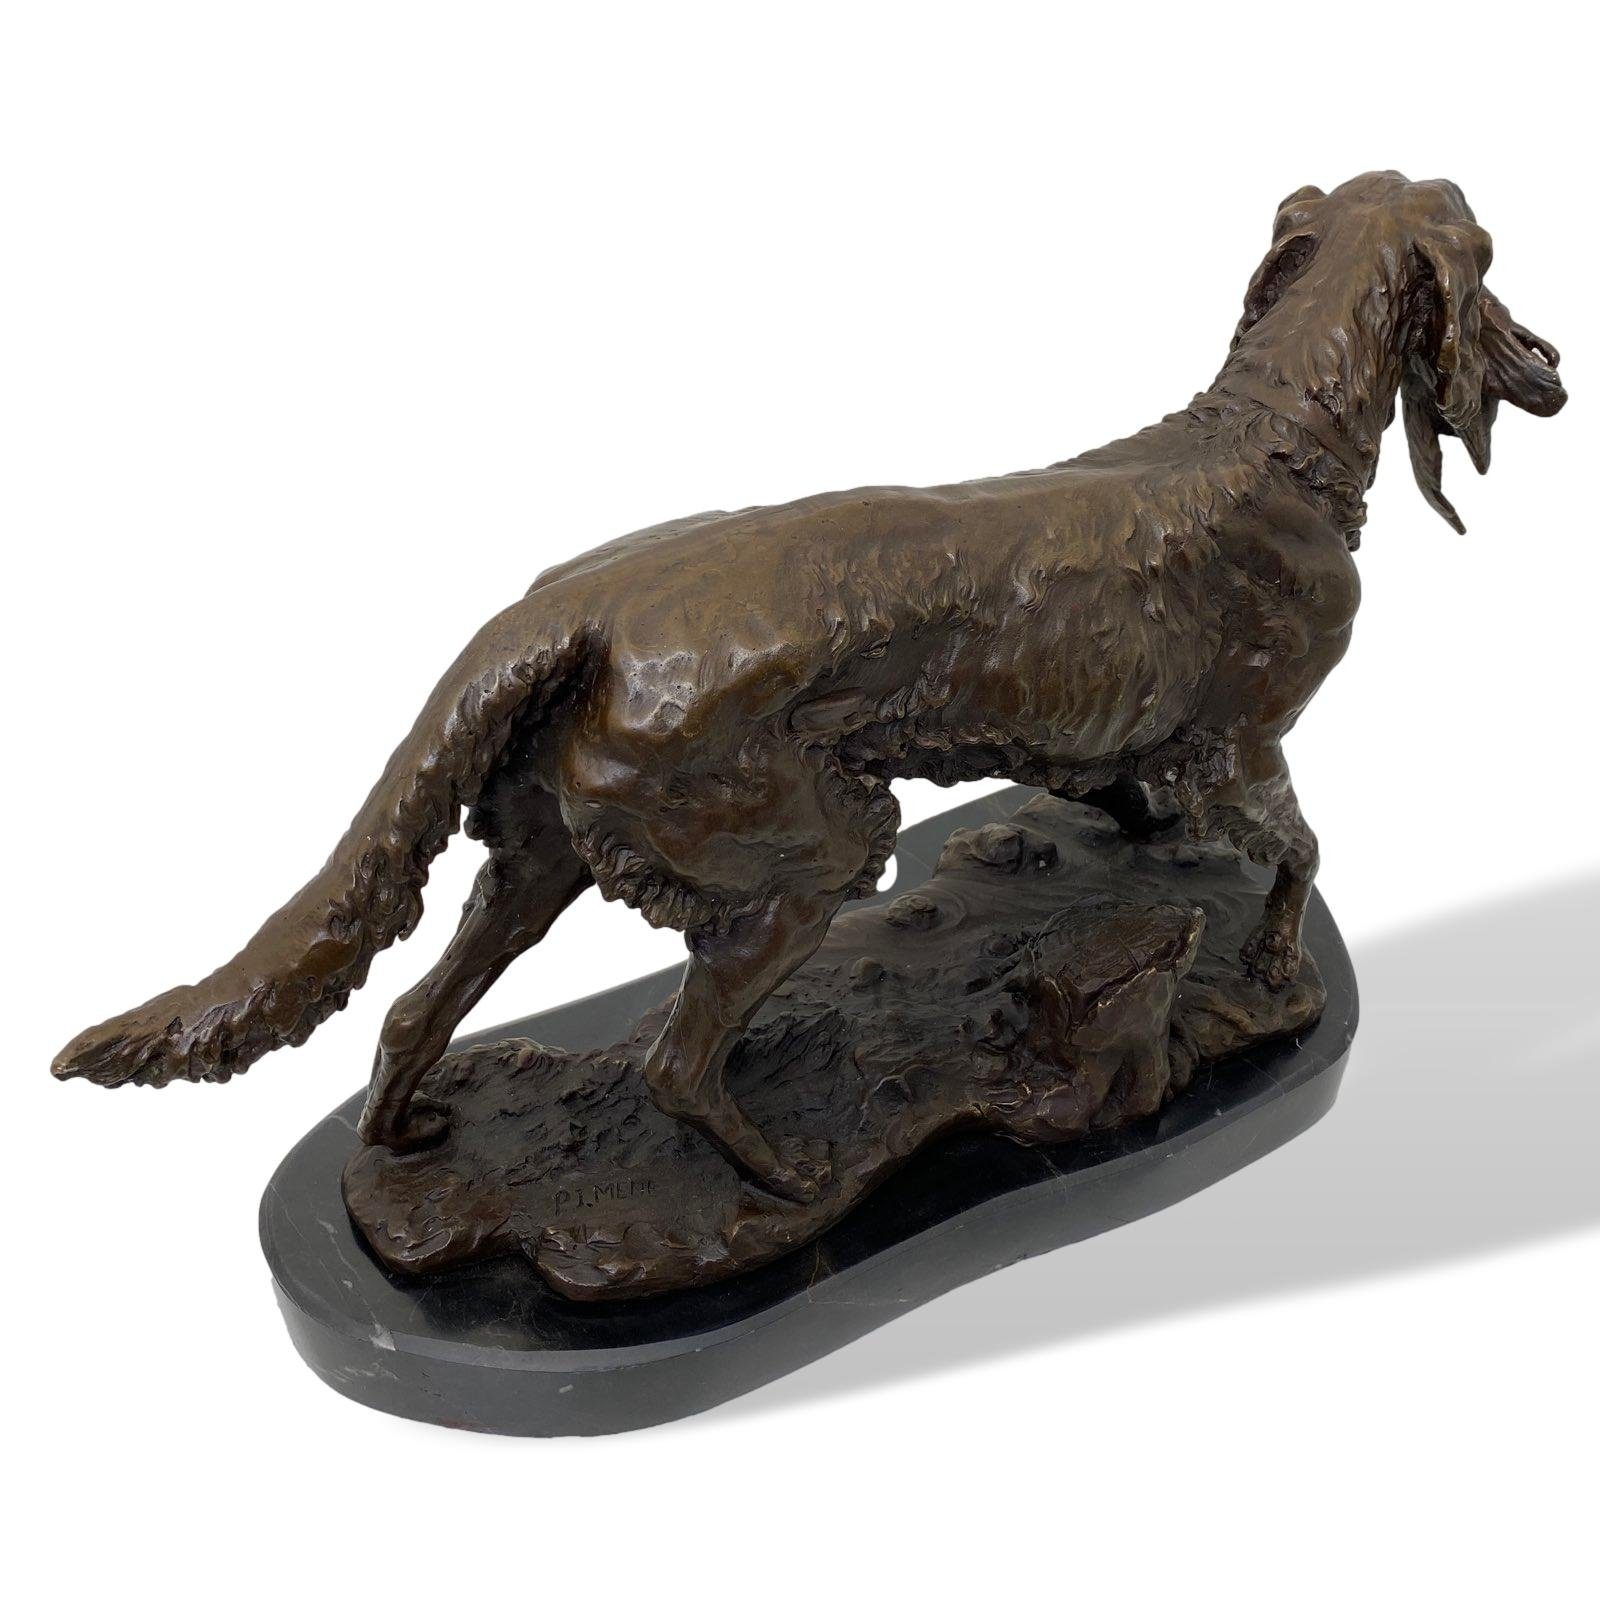 Aubaho Skulptur Bronzeskulptur Hund Bronze Mene Statue Figur nach Antik-Stil Jagdhund